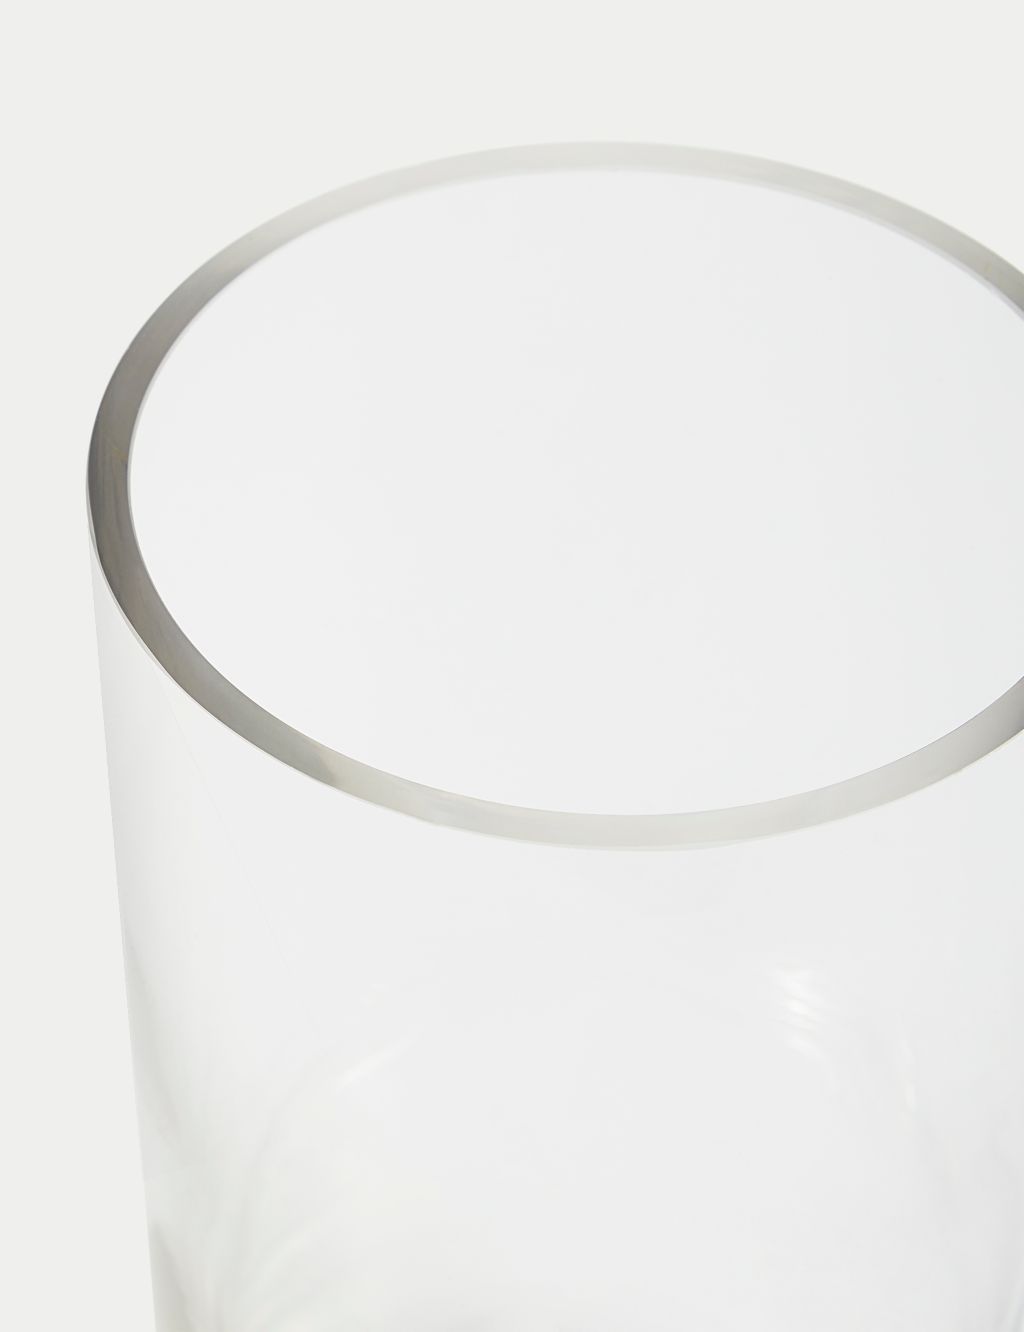 Medium Cylinder Vase 2 of 4